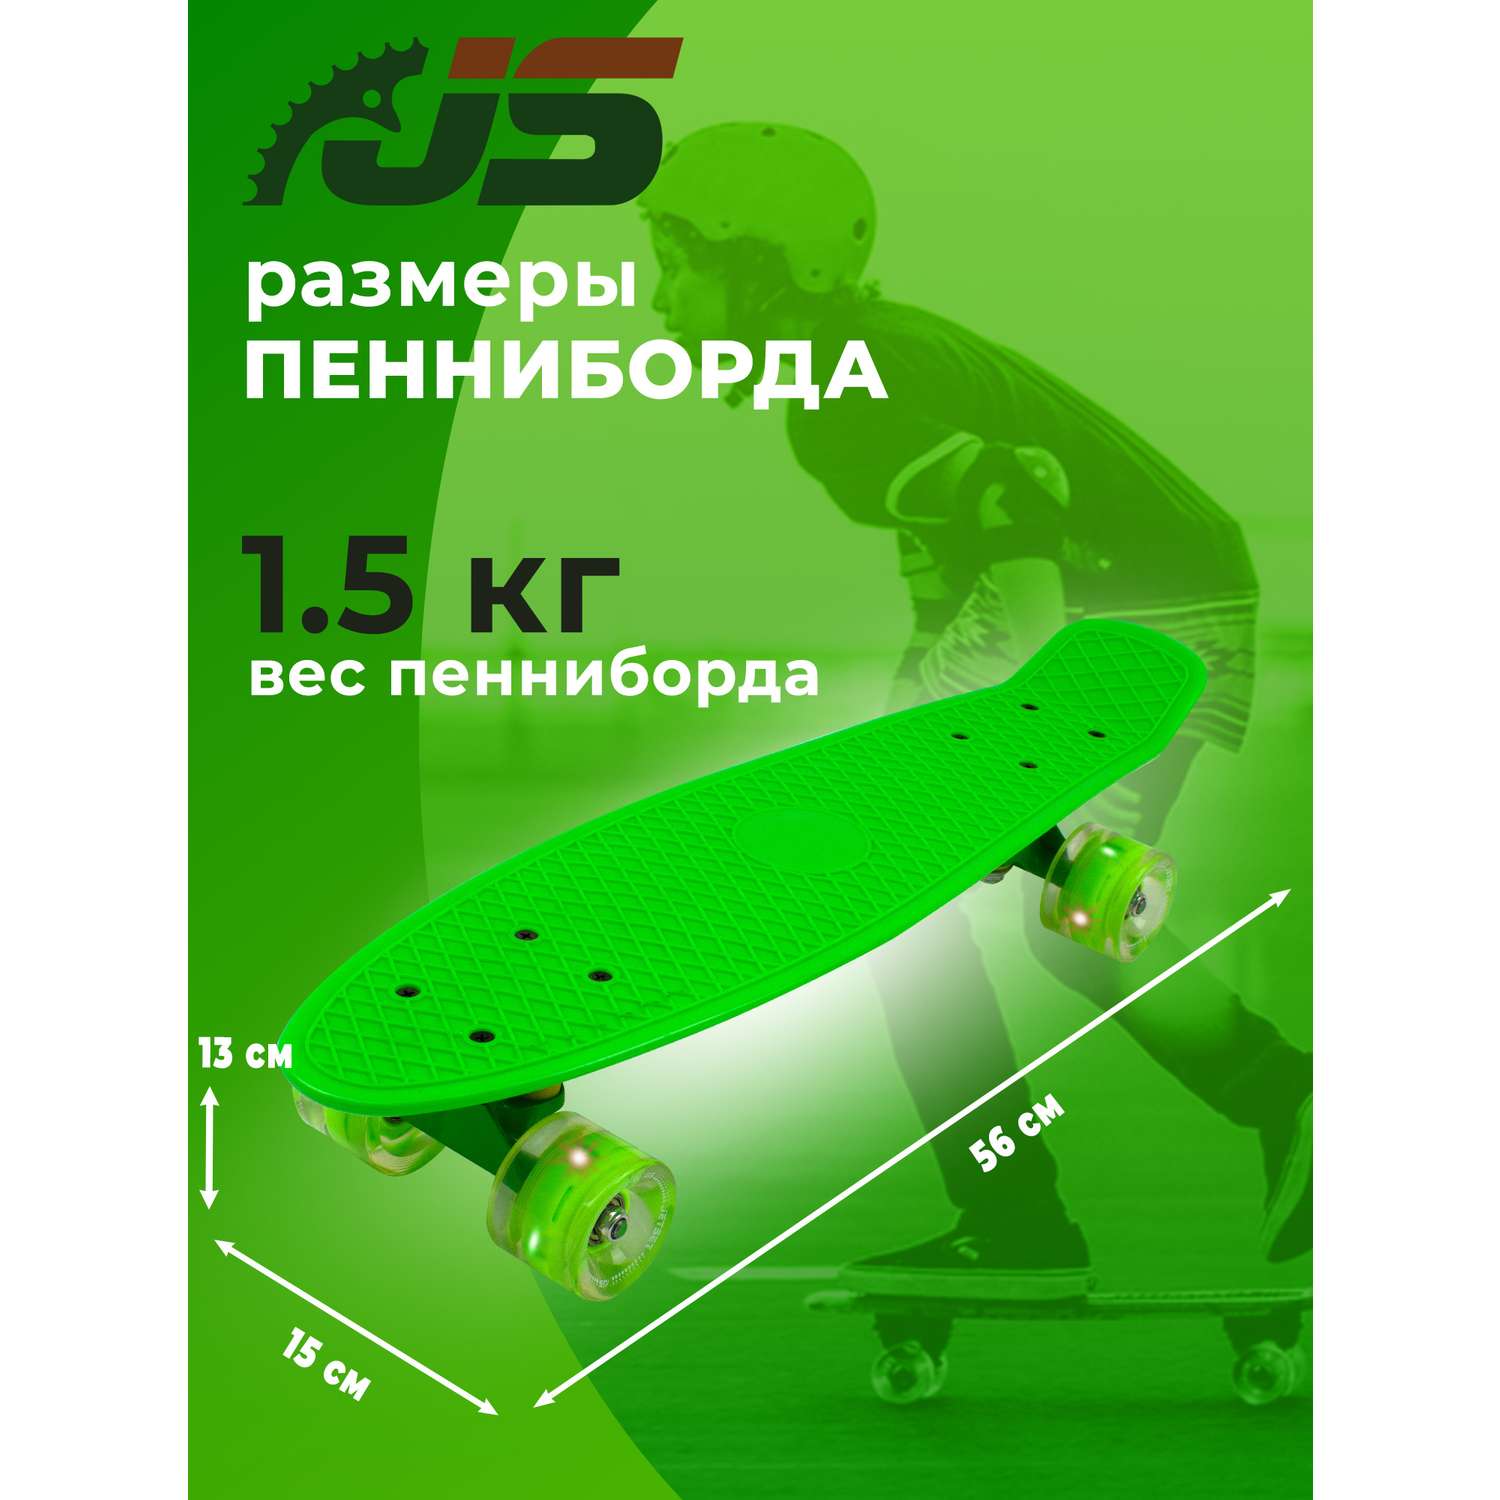 Скейтборд JETSET детский зеленый - фото 2